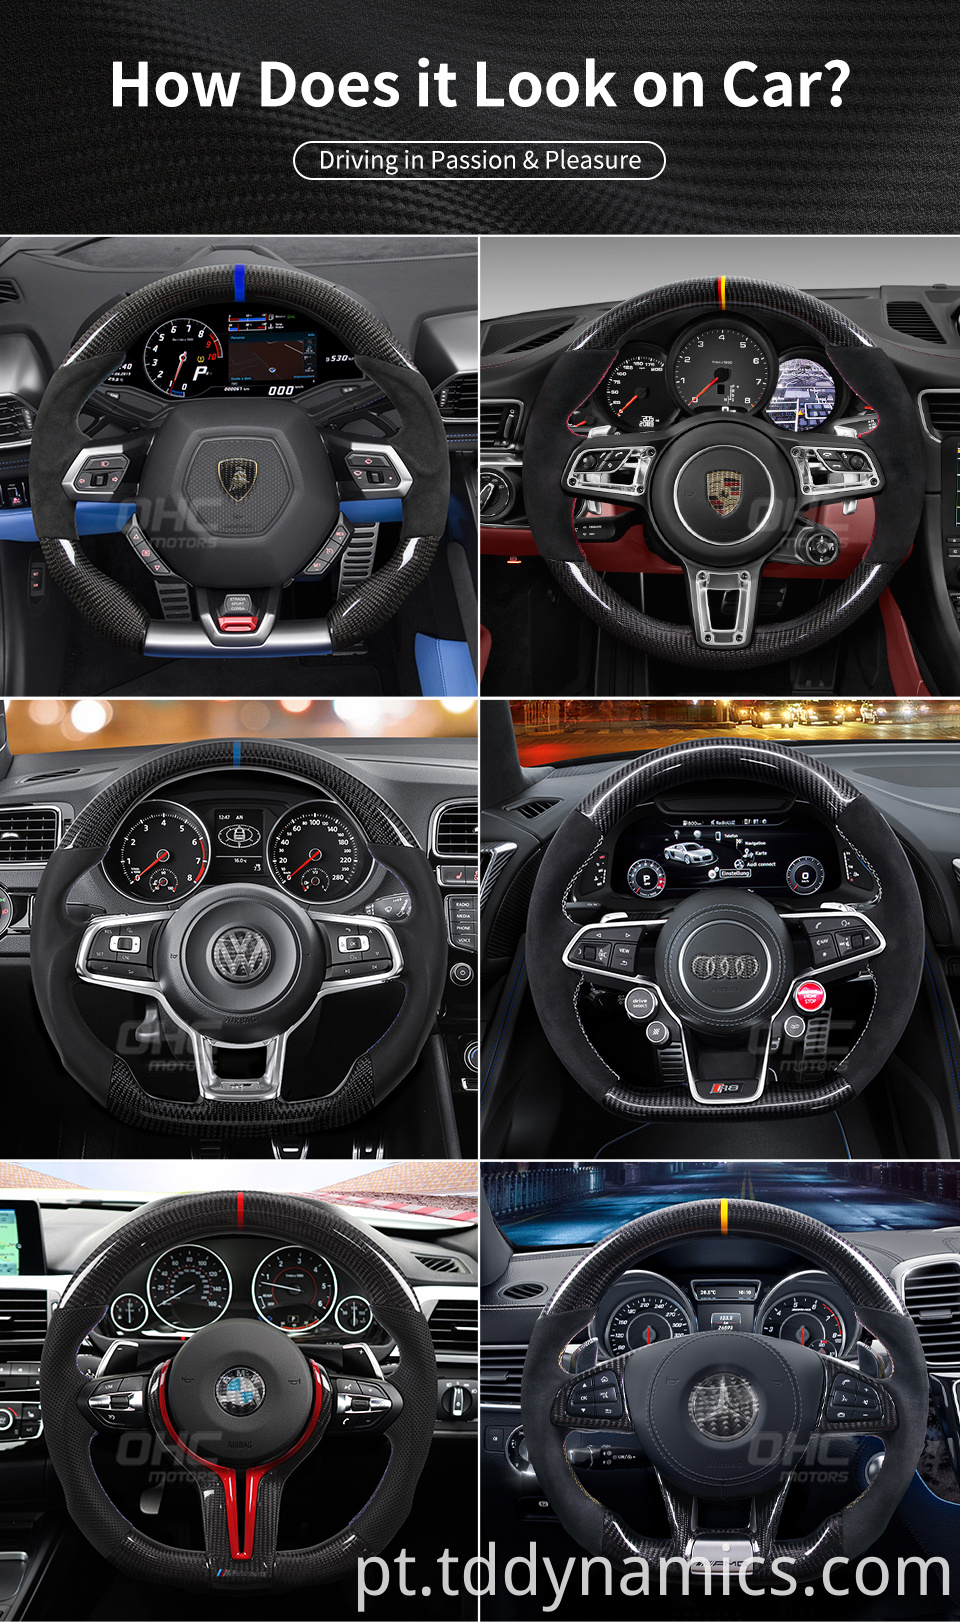 Carbon Fiber Steering Wheel Details